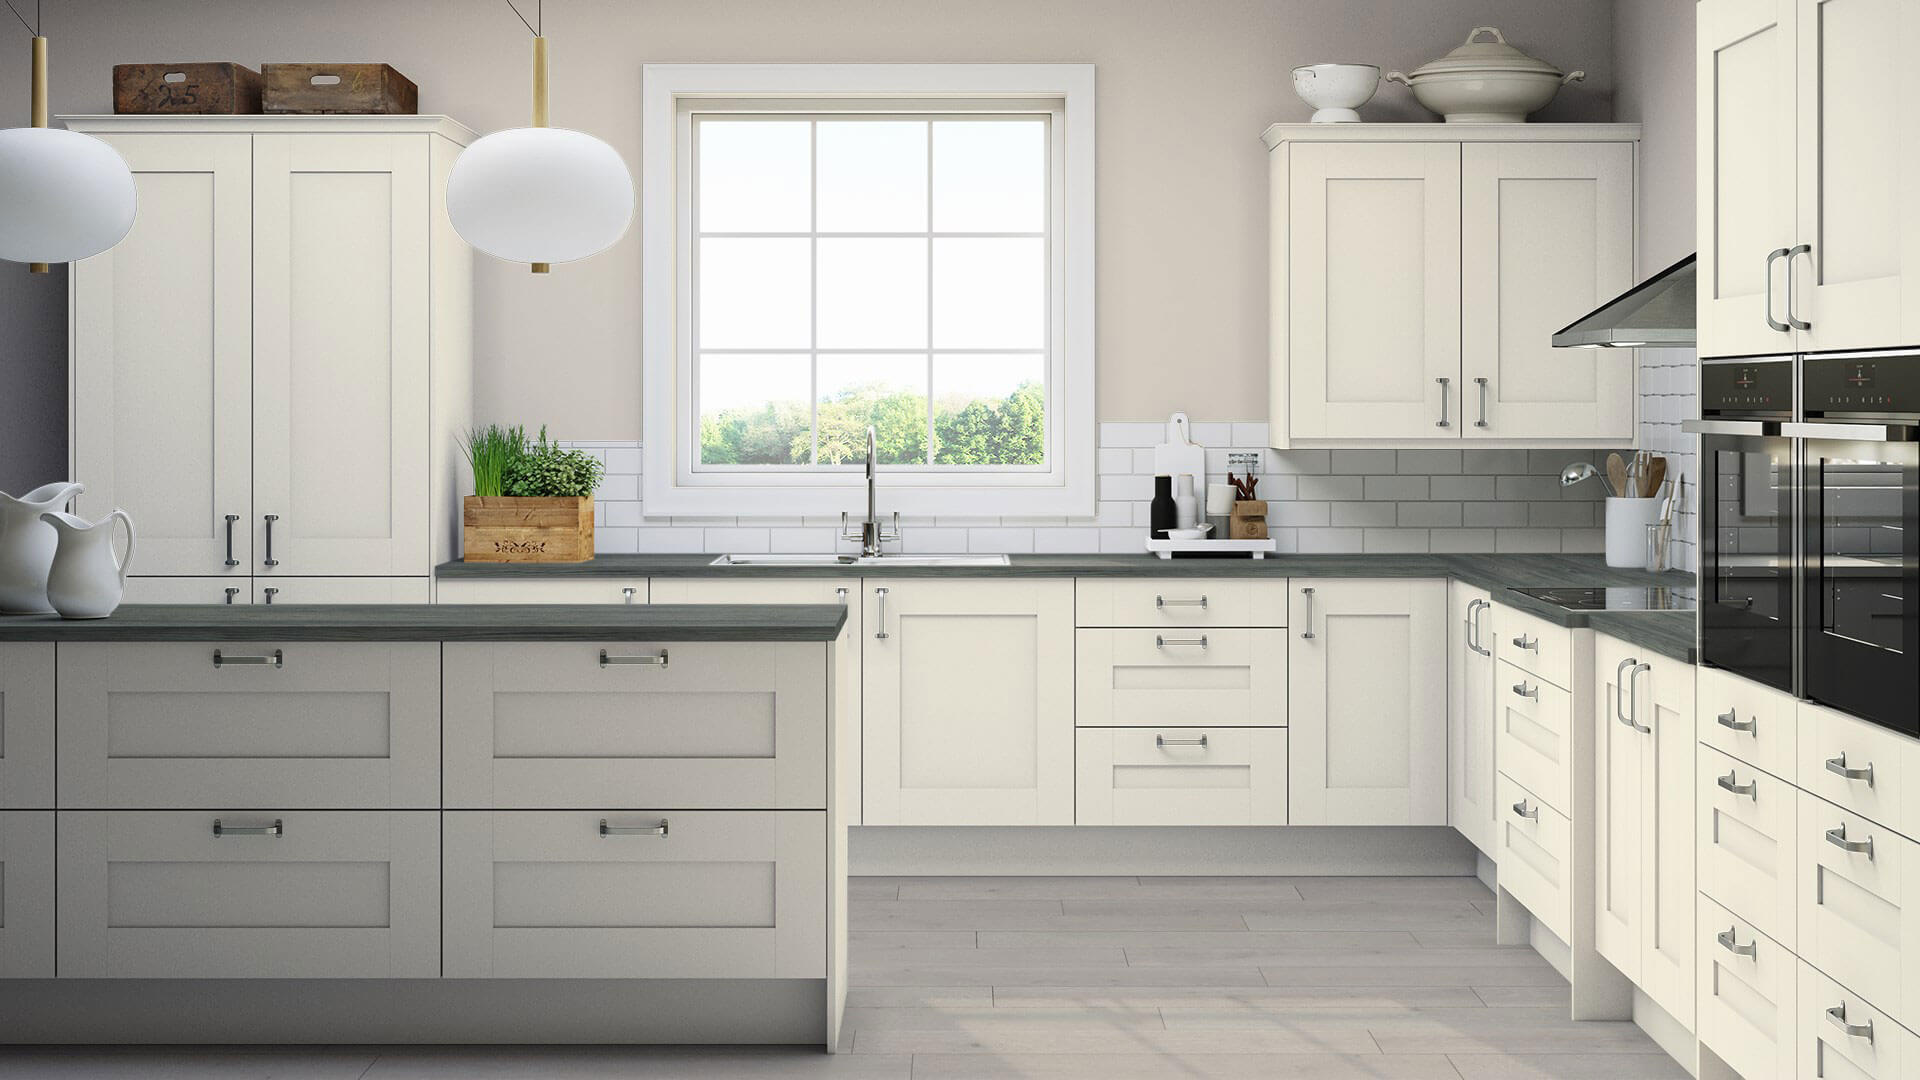 Homebase Kitchen Wall Cabinets : Kitchen Ideas Homebase Homebase